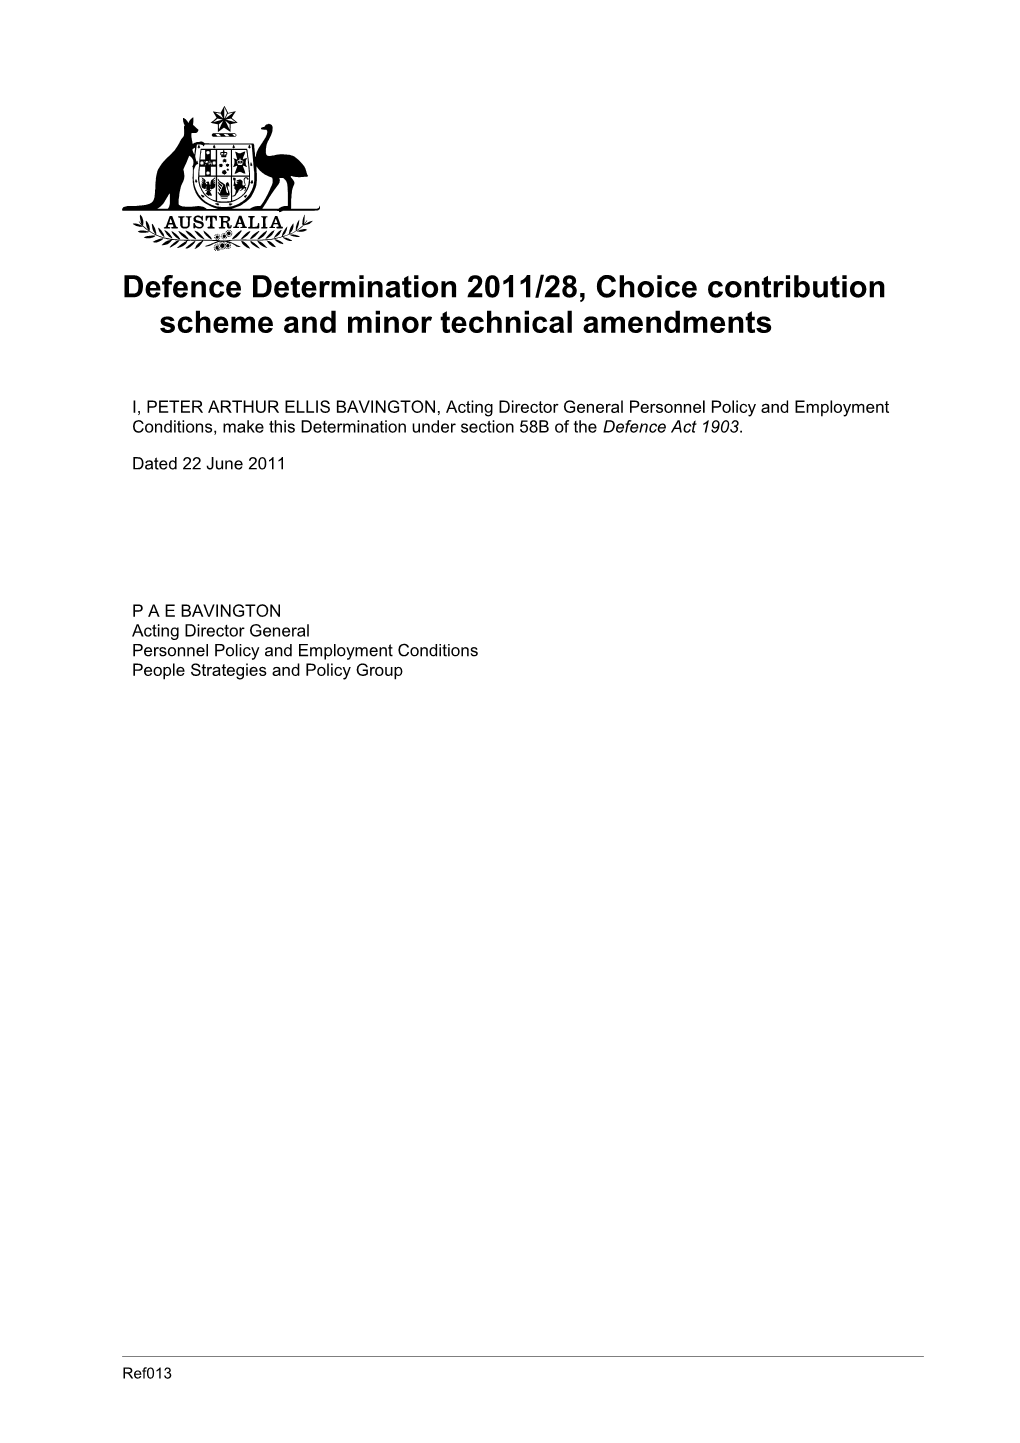 Defence Determination 2011/28, Choice Contribution Scheme and Minor Technical Amendments